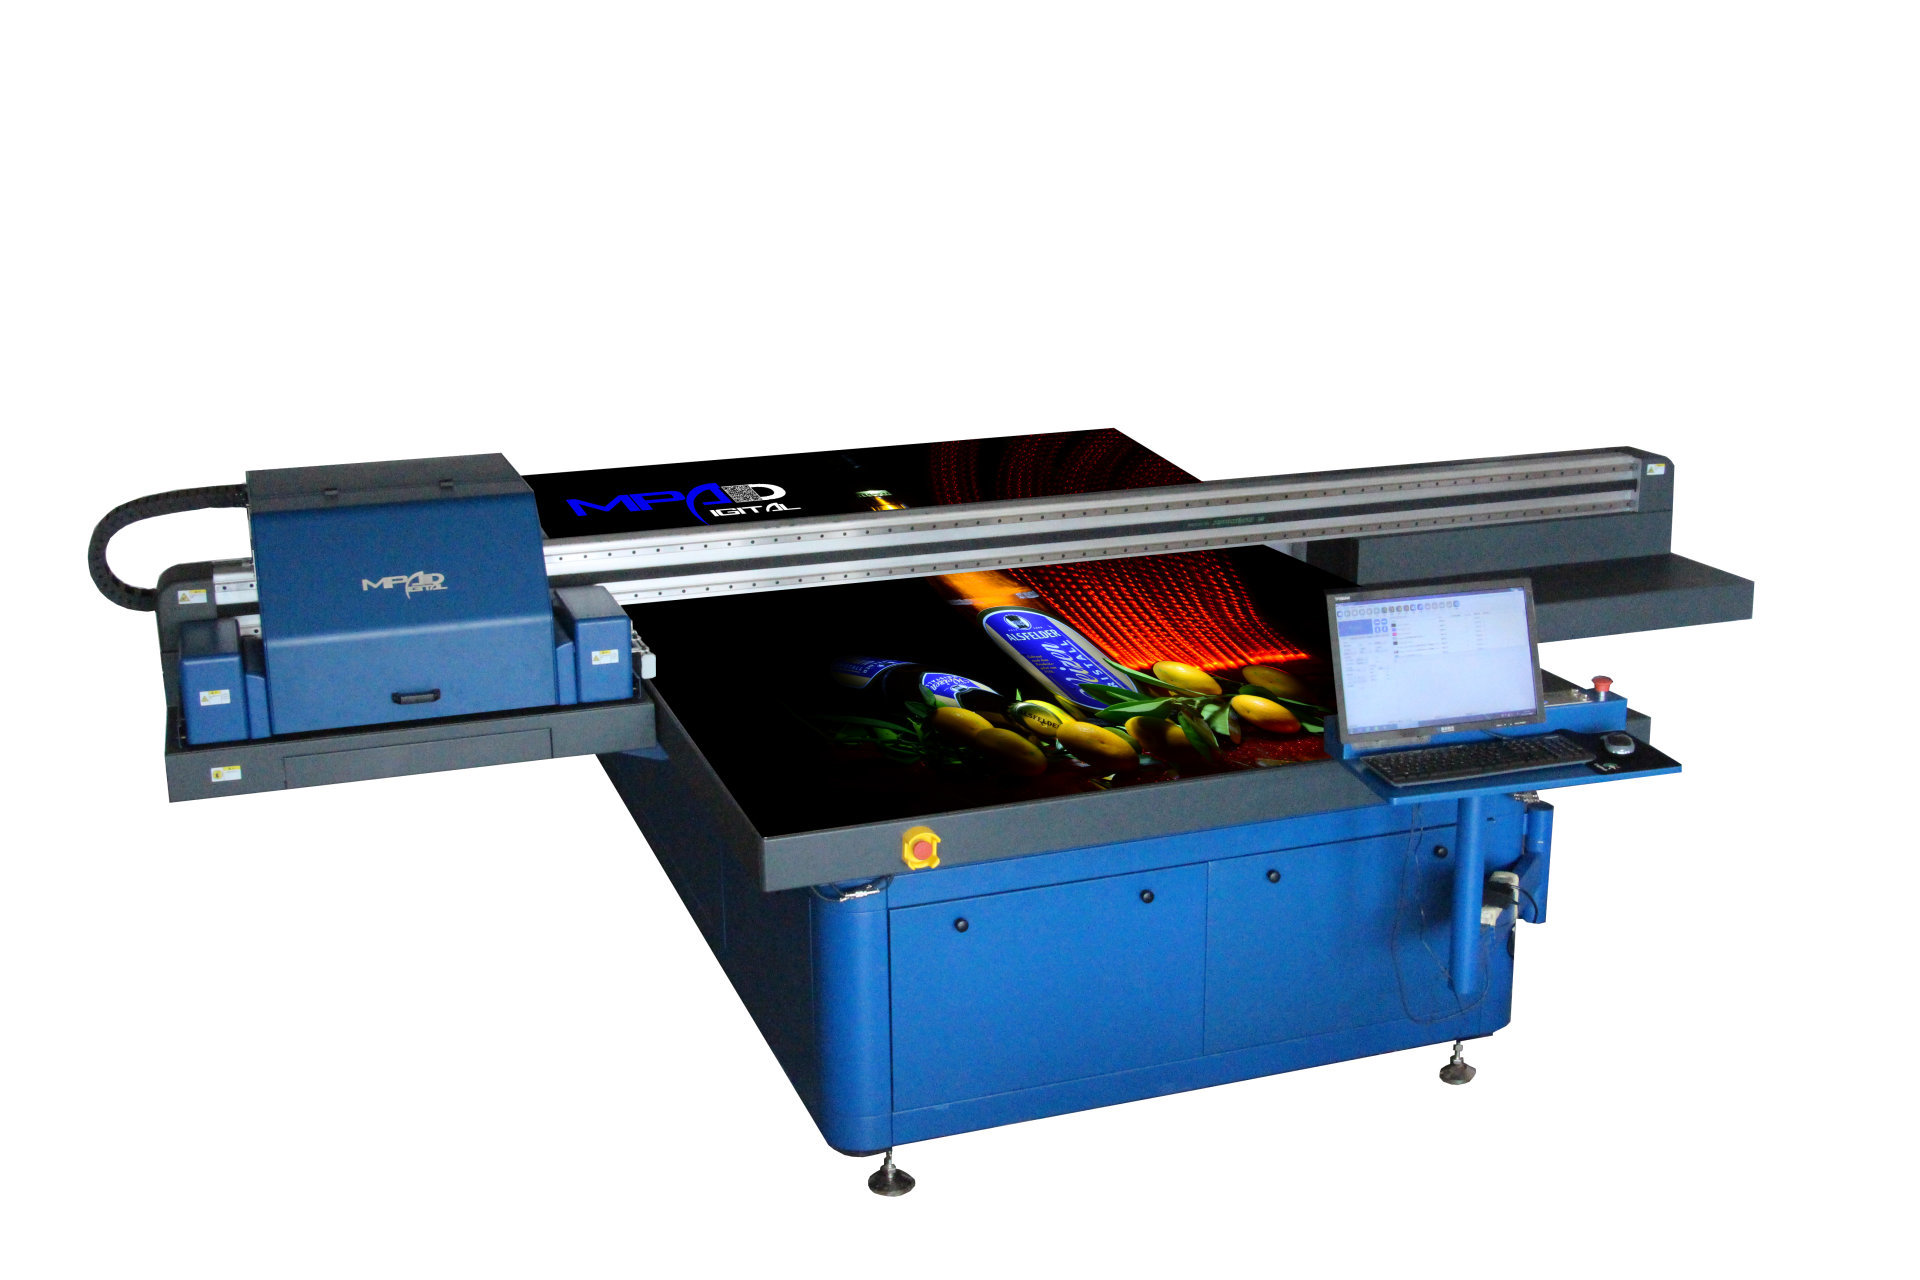 Beyonder 3220 UV Flatbed printer